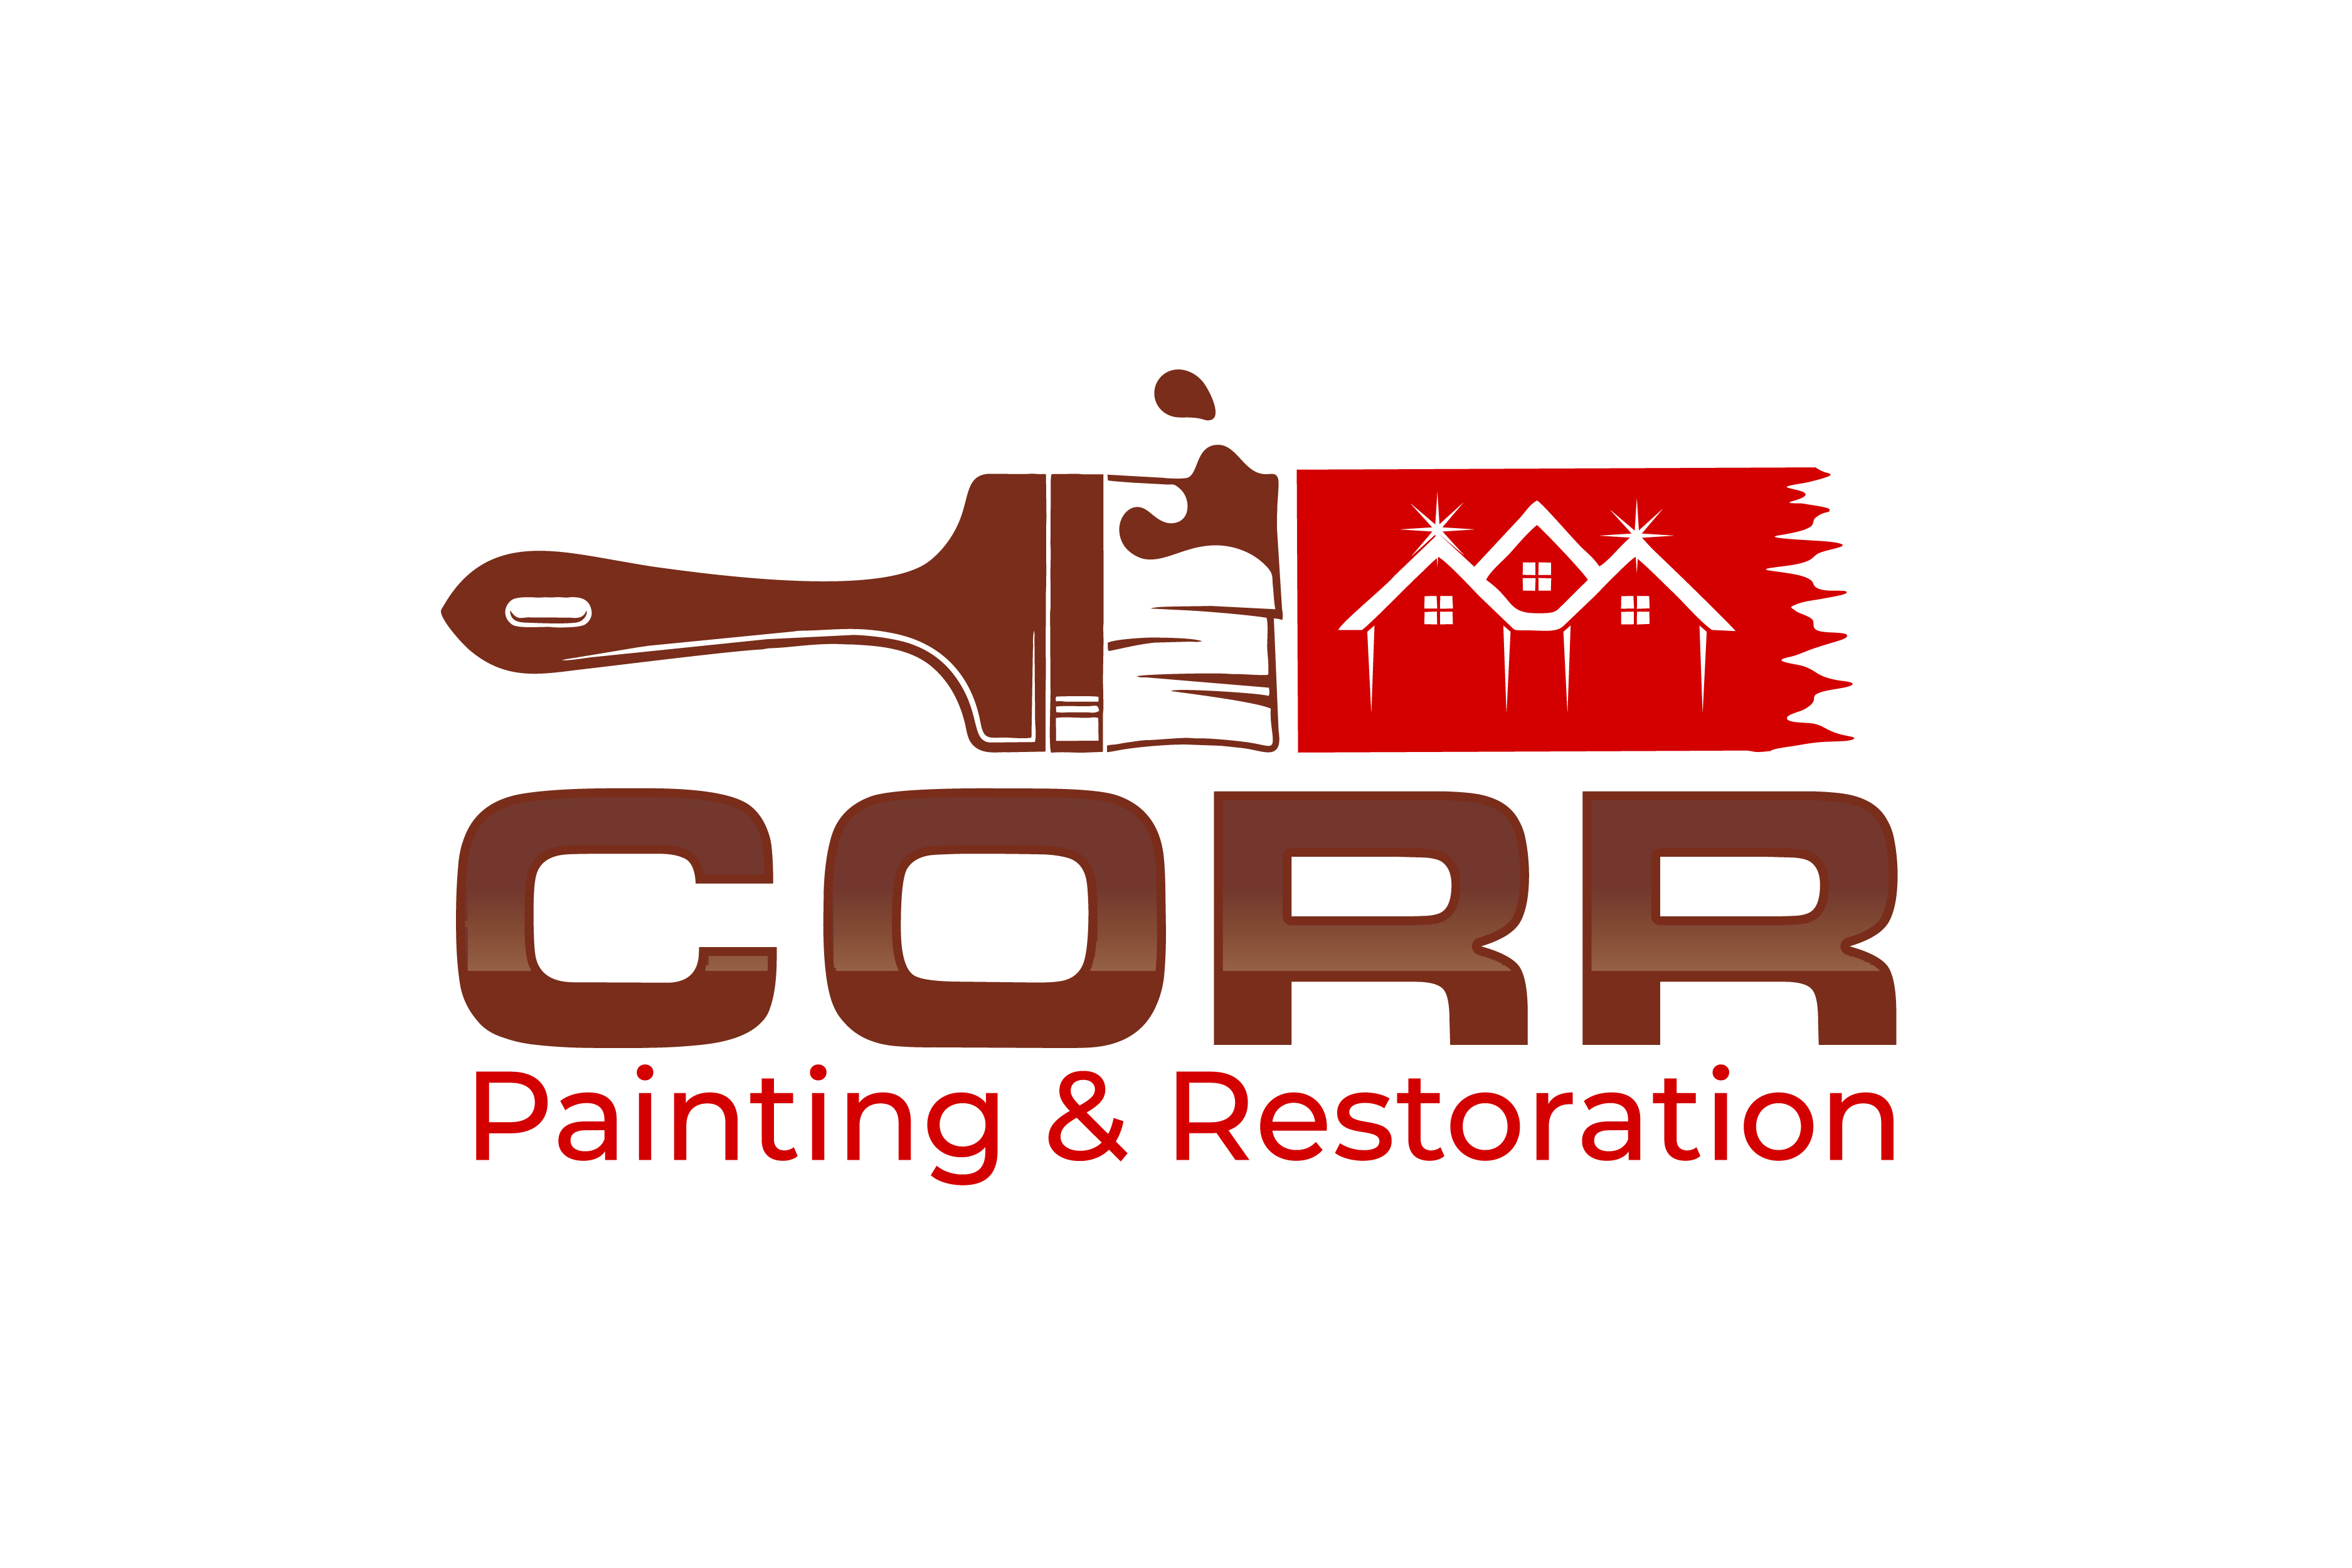 Corr Painting and Restoration - PainterChoice.com™